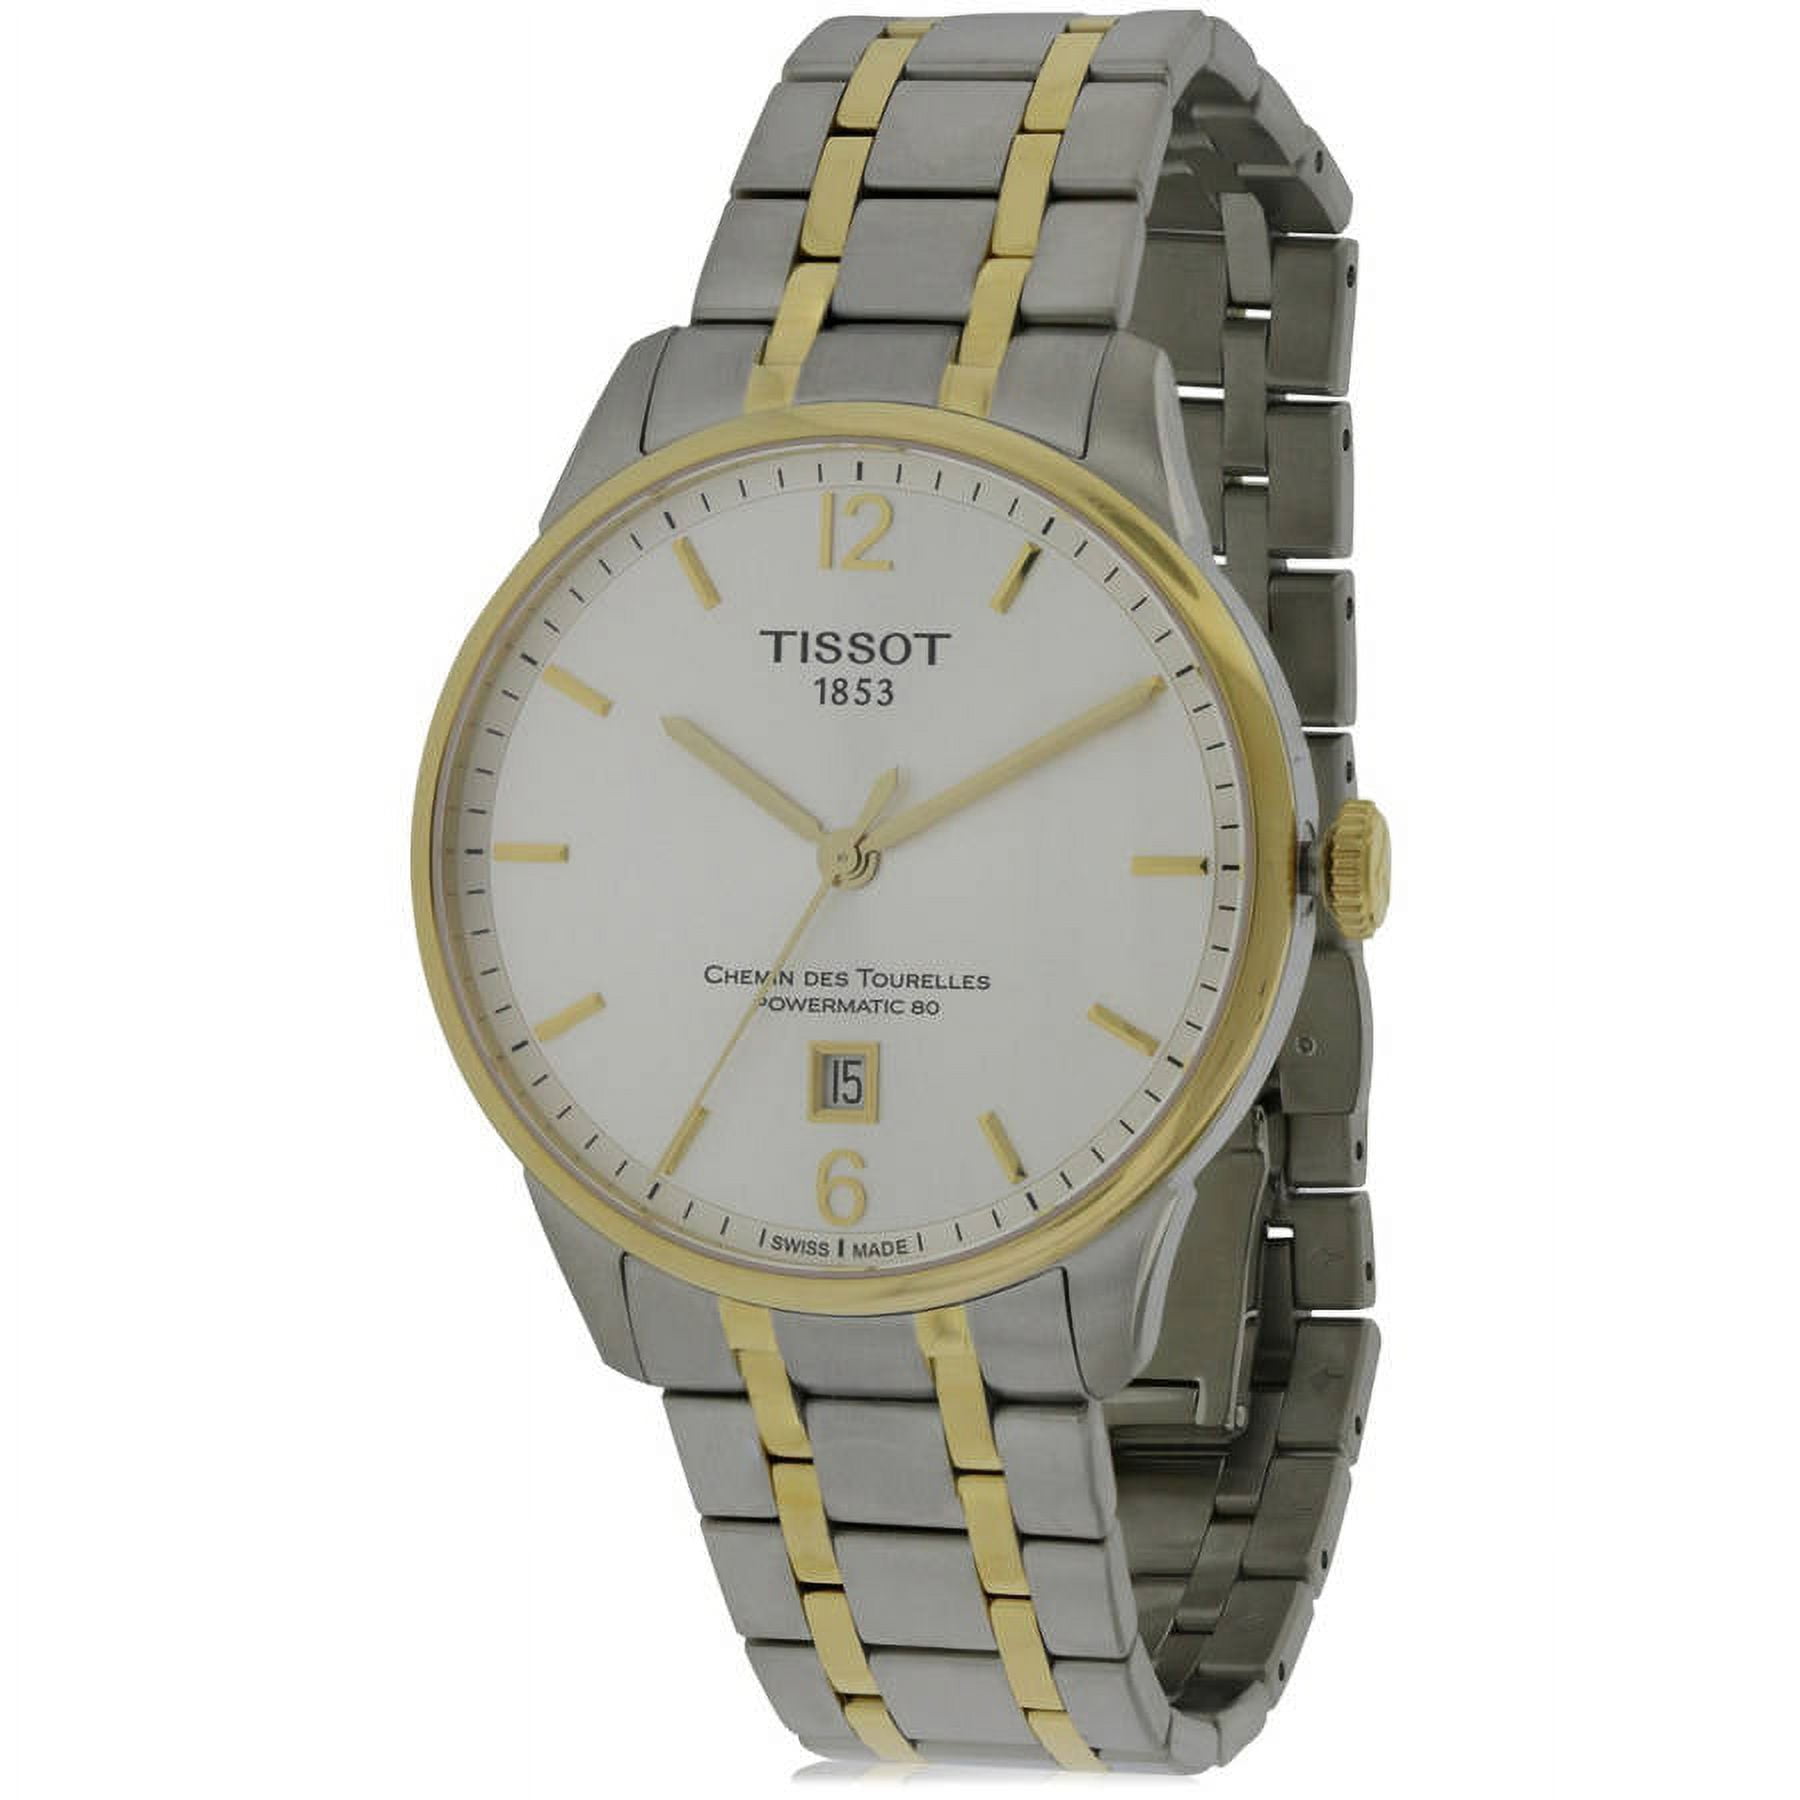 Tissot T-Classic Automatic Men's Watch, T0994072203700 - Walmart.com